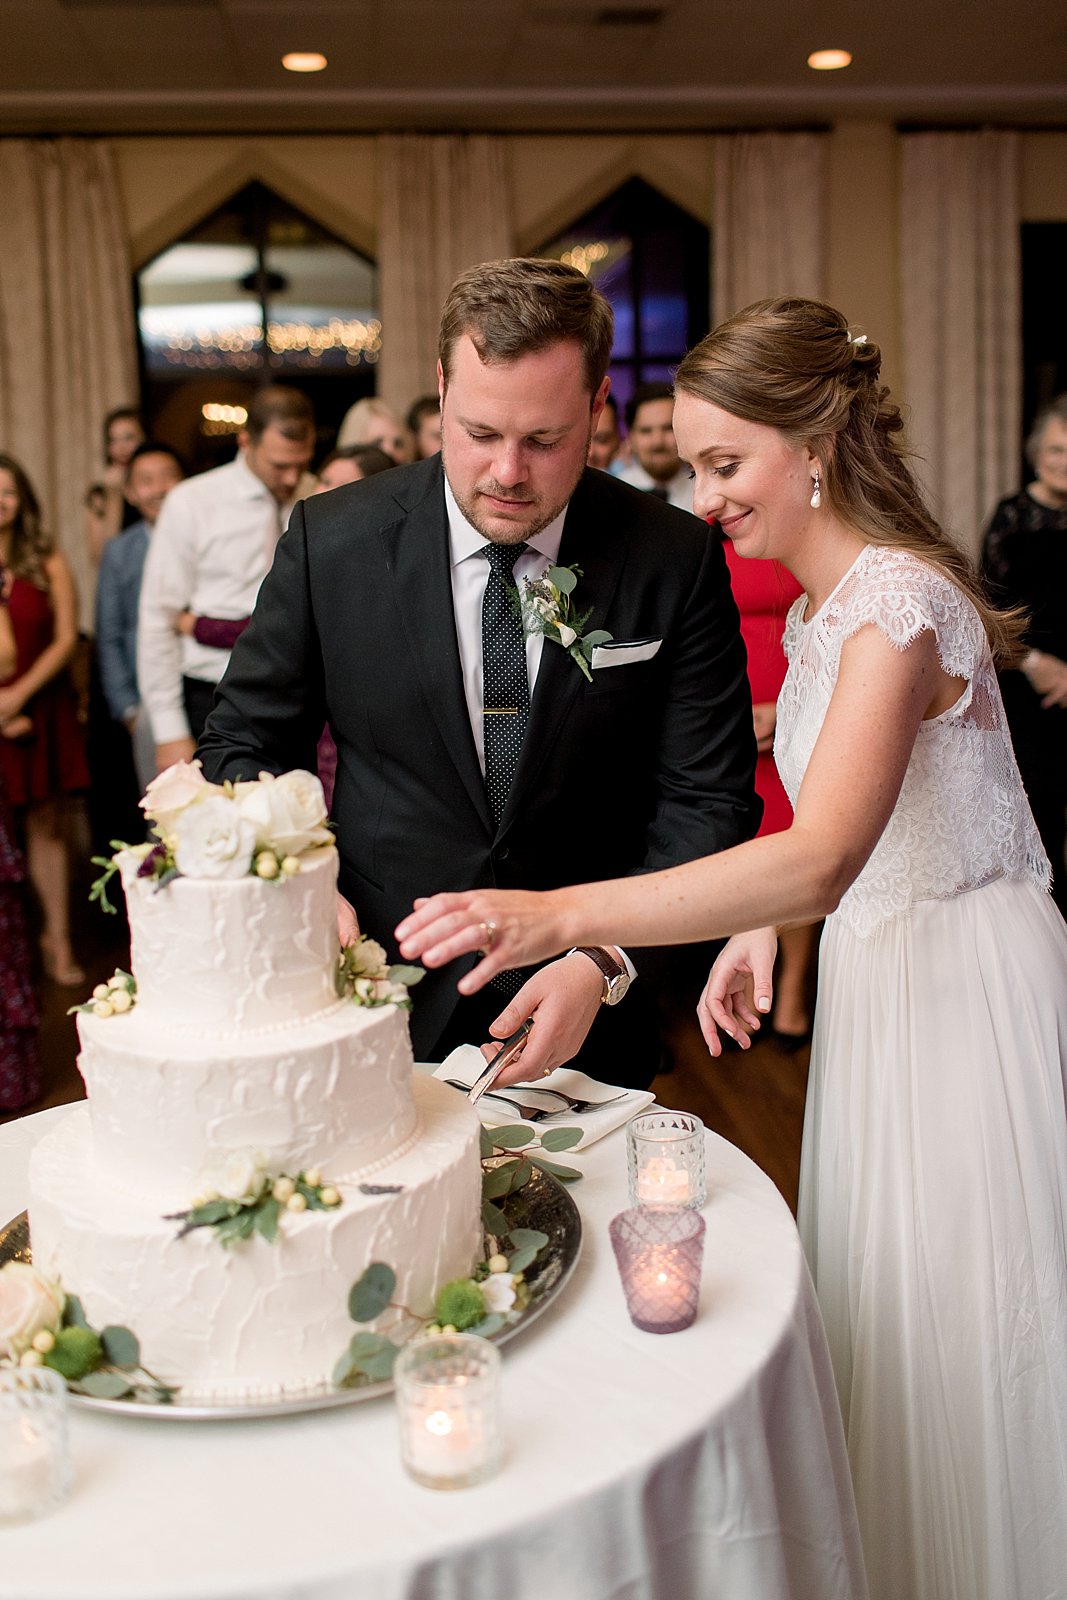 newlyweds cut wedding cake during Aldie Mansion wedding reception